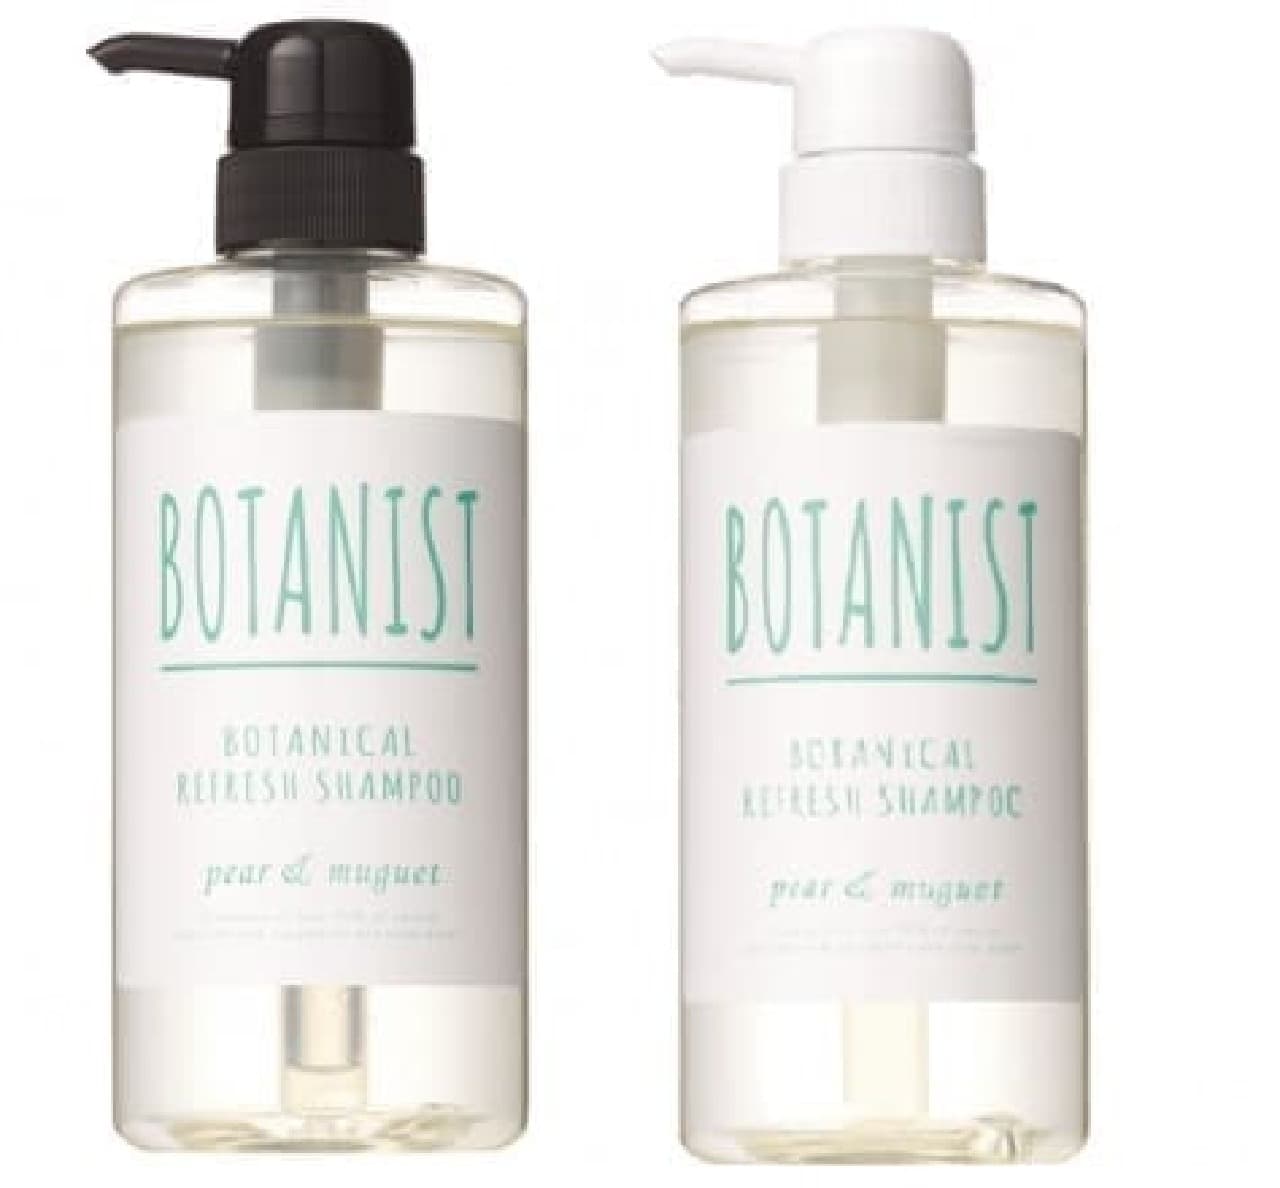 BOTANIST "Botanical Refresh Shampoo 17"